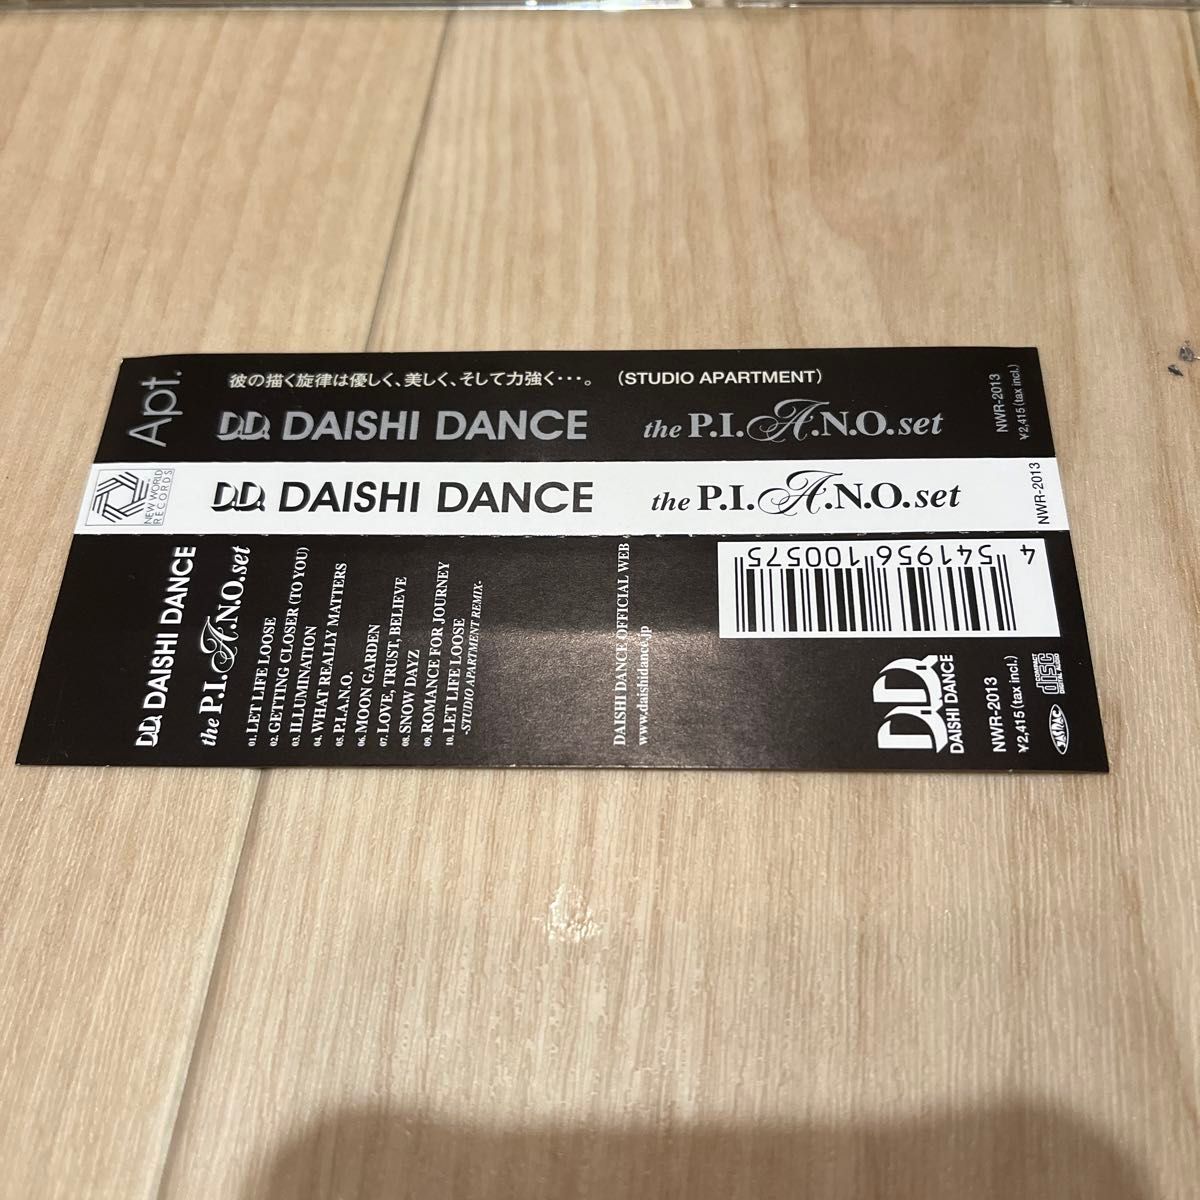 the P.I.A.N.O.set CD D.D.DAISHI DANCE